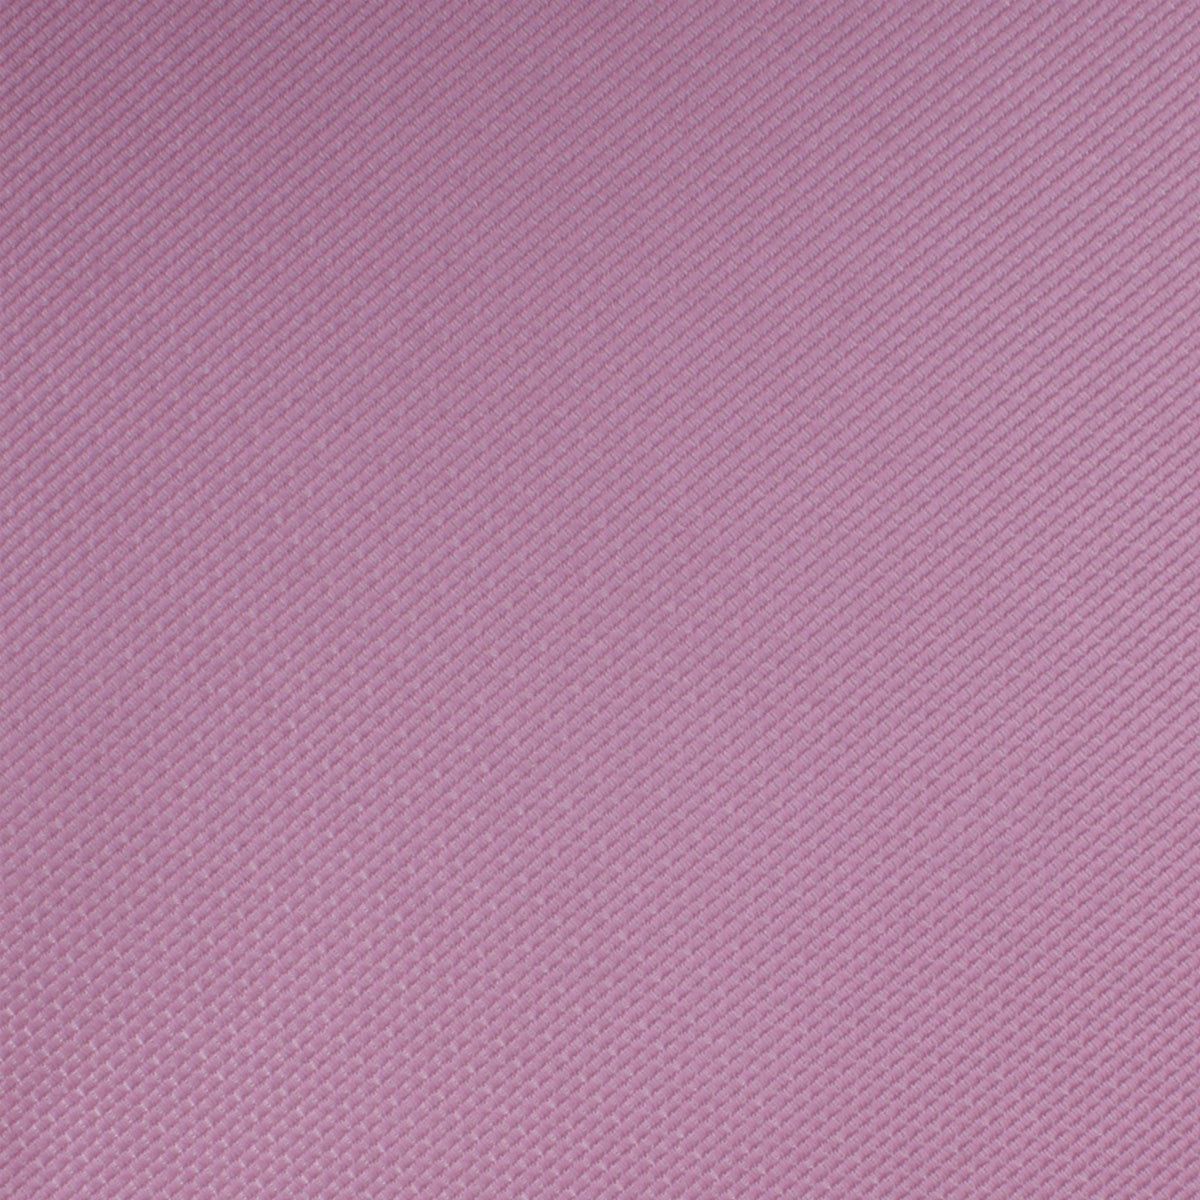 Deep Wisteria Purple Weave Fabric Swatch